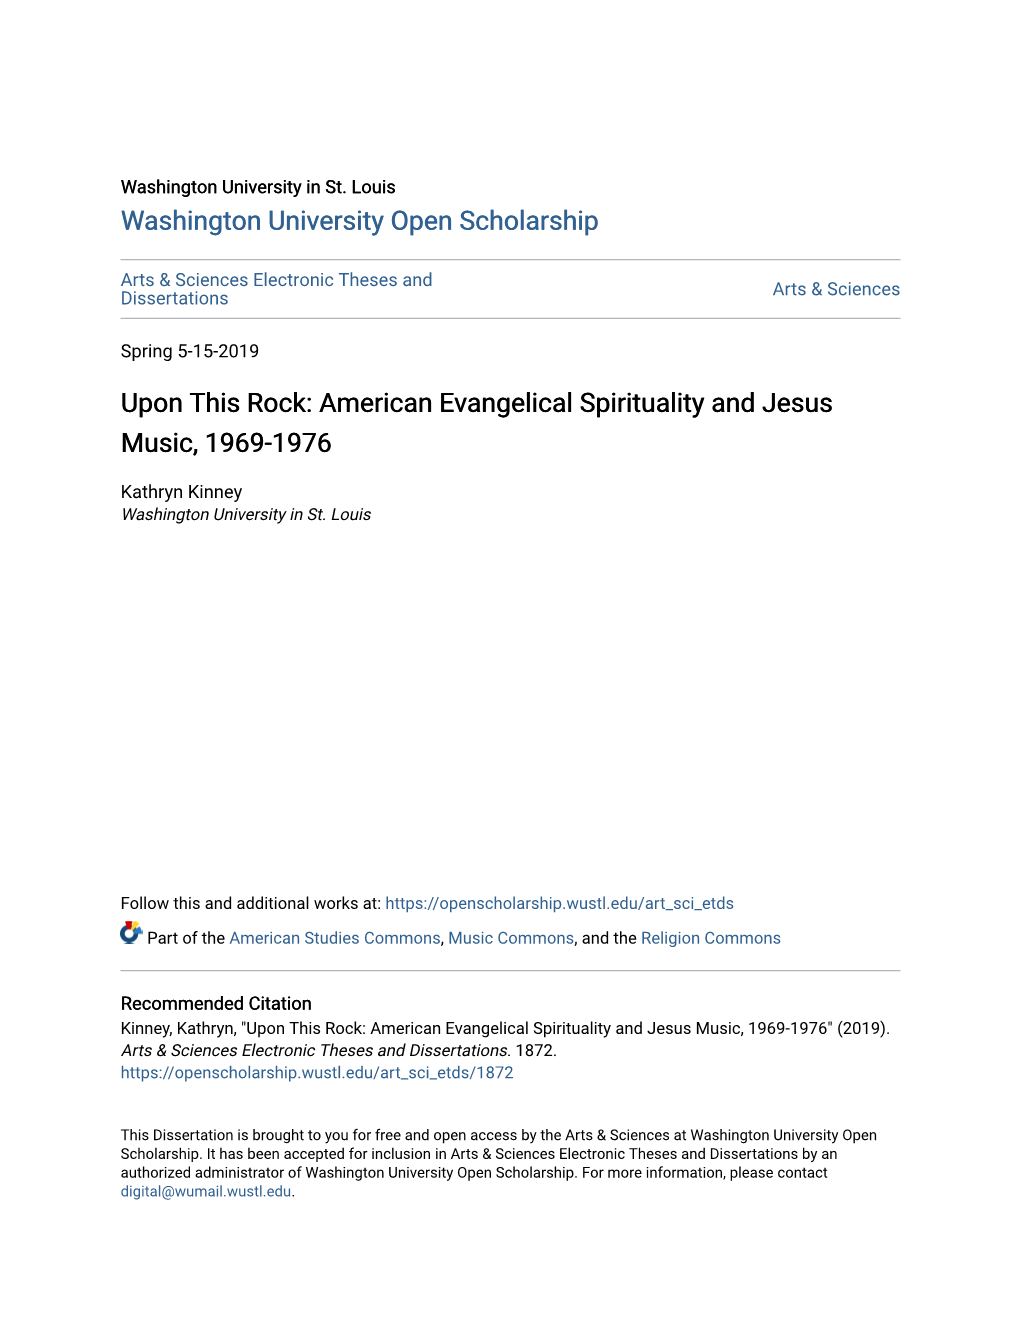 American Evangelical Spirituality and Jesus Music, 1969-1976